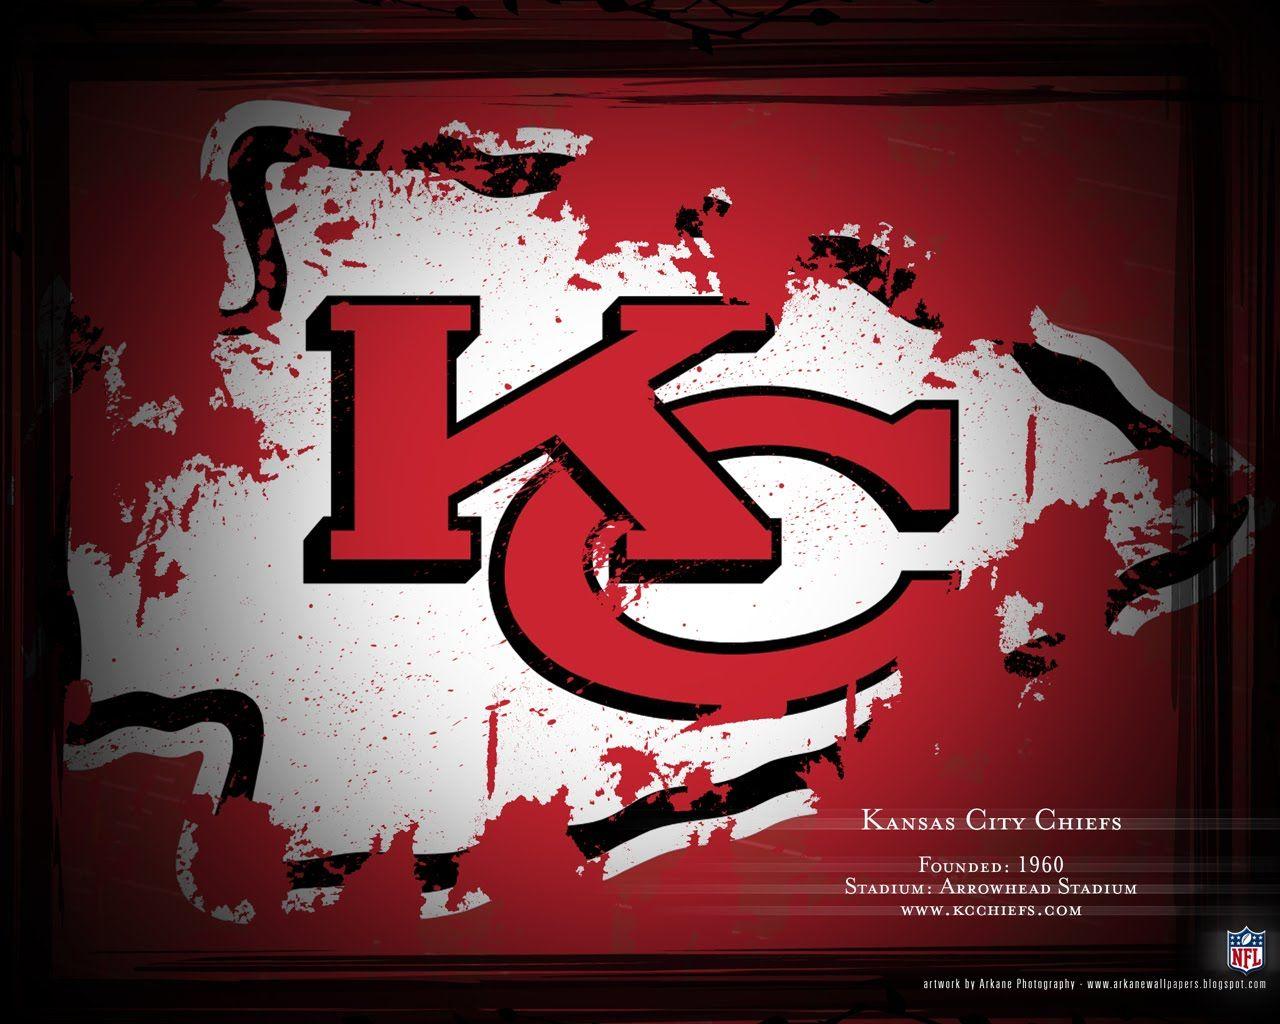 Kansas City Chiefs Super Bowl Champion Desktop Wallpapers - Wallpaper Cave